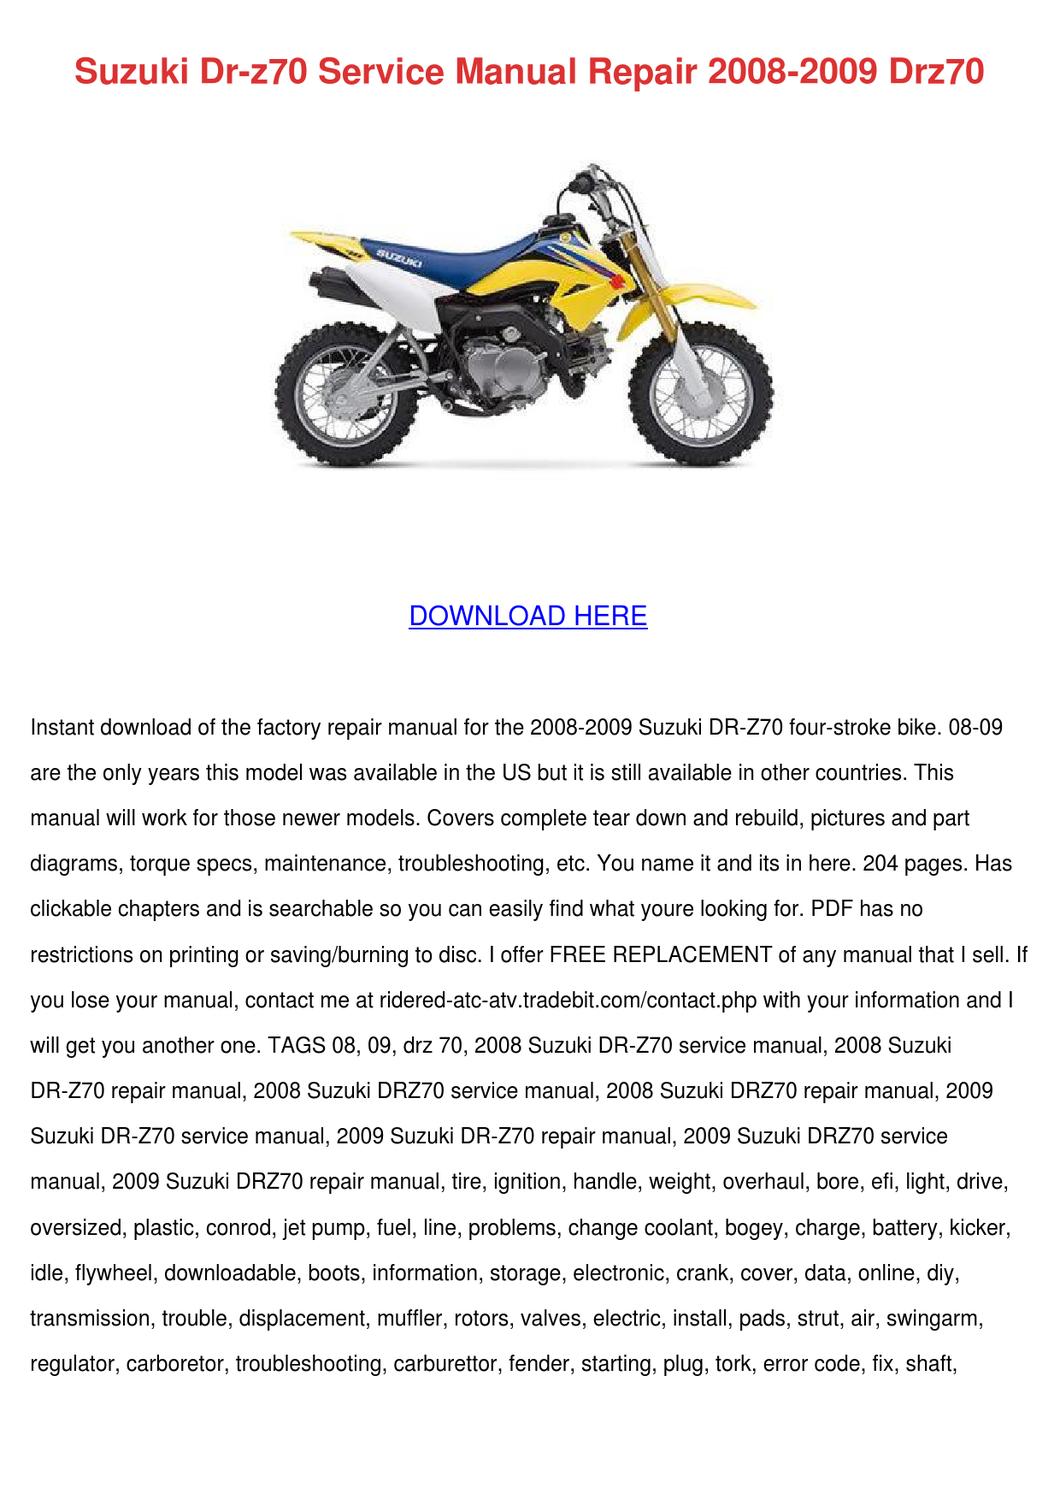 Suzuki 2009 drz400sm service manual pdf free download windows 7